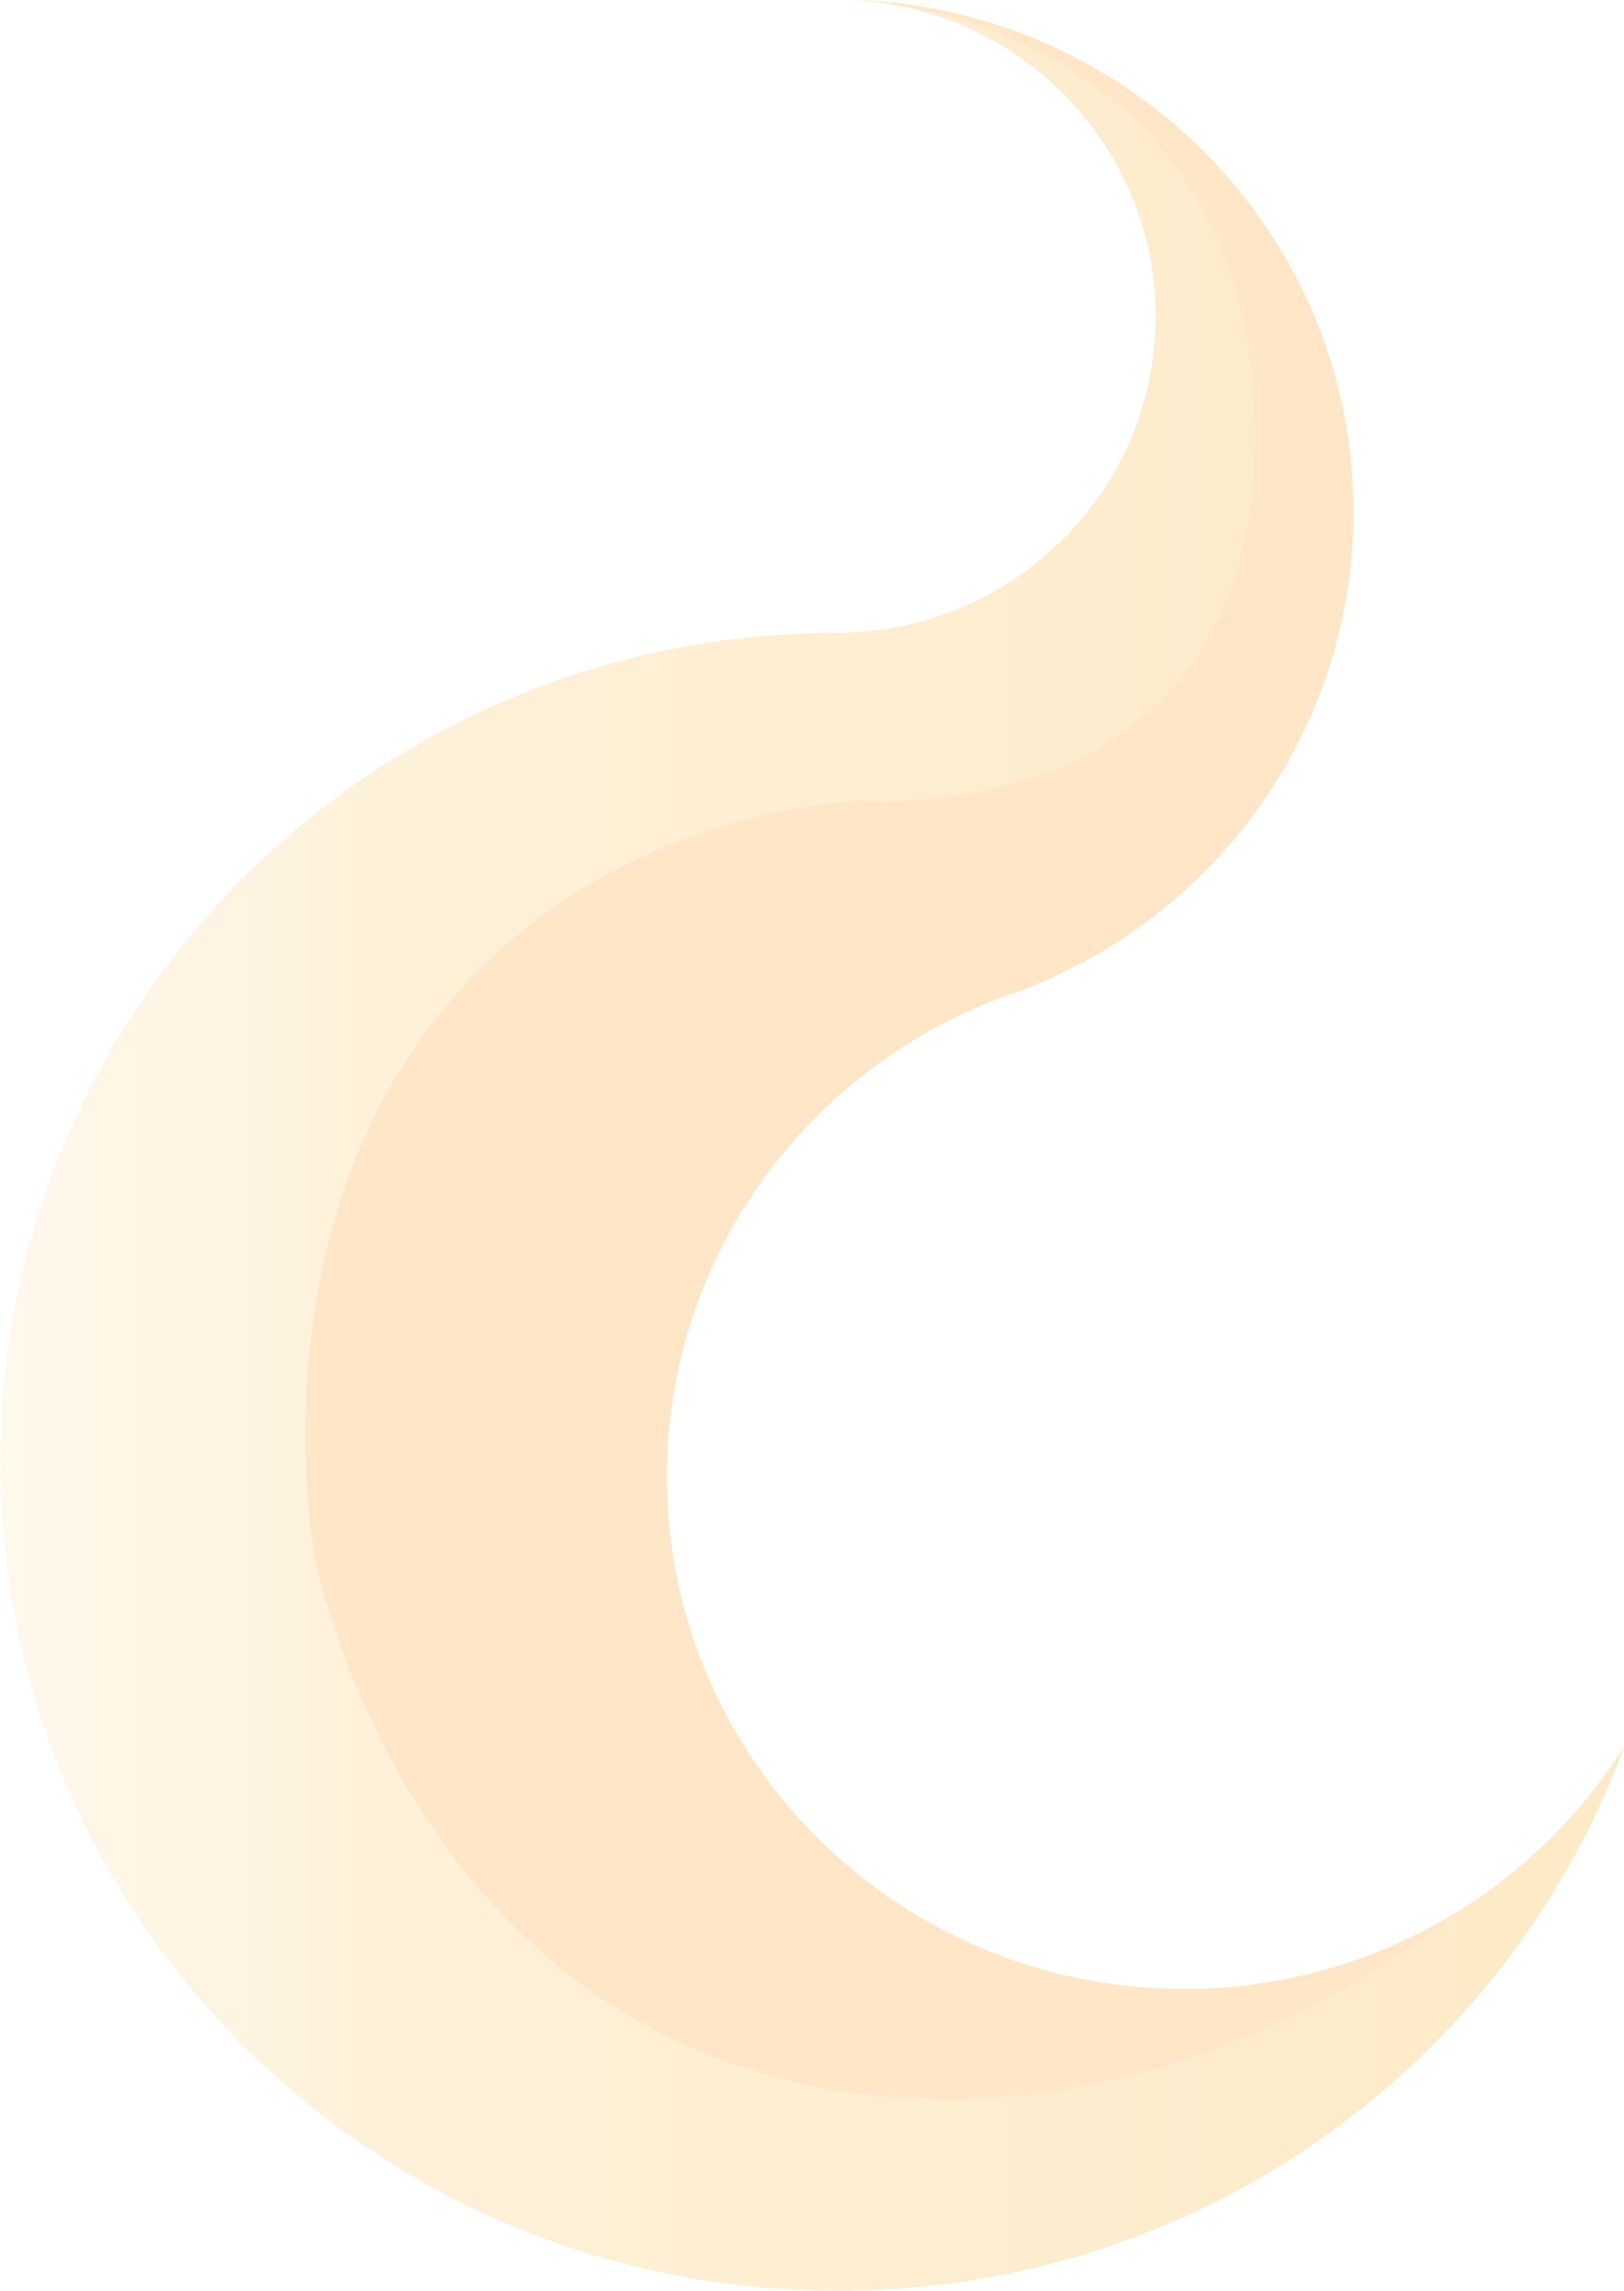 creamie logo